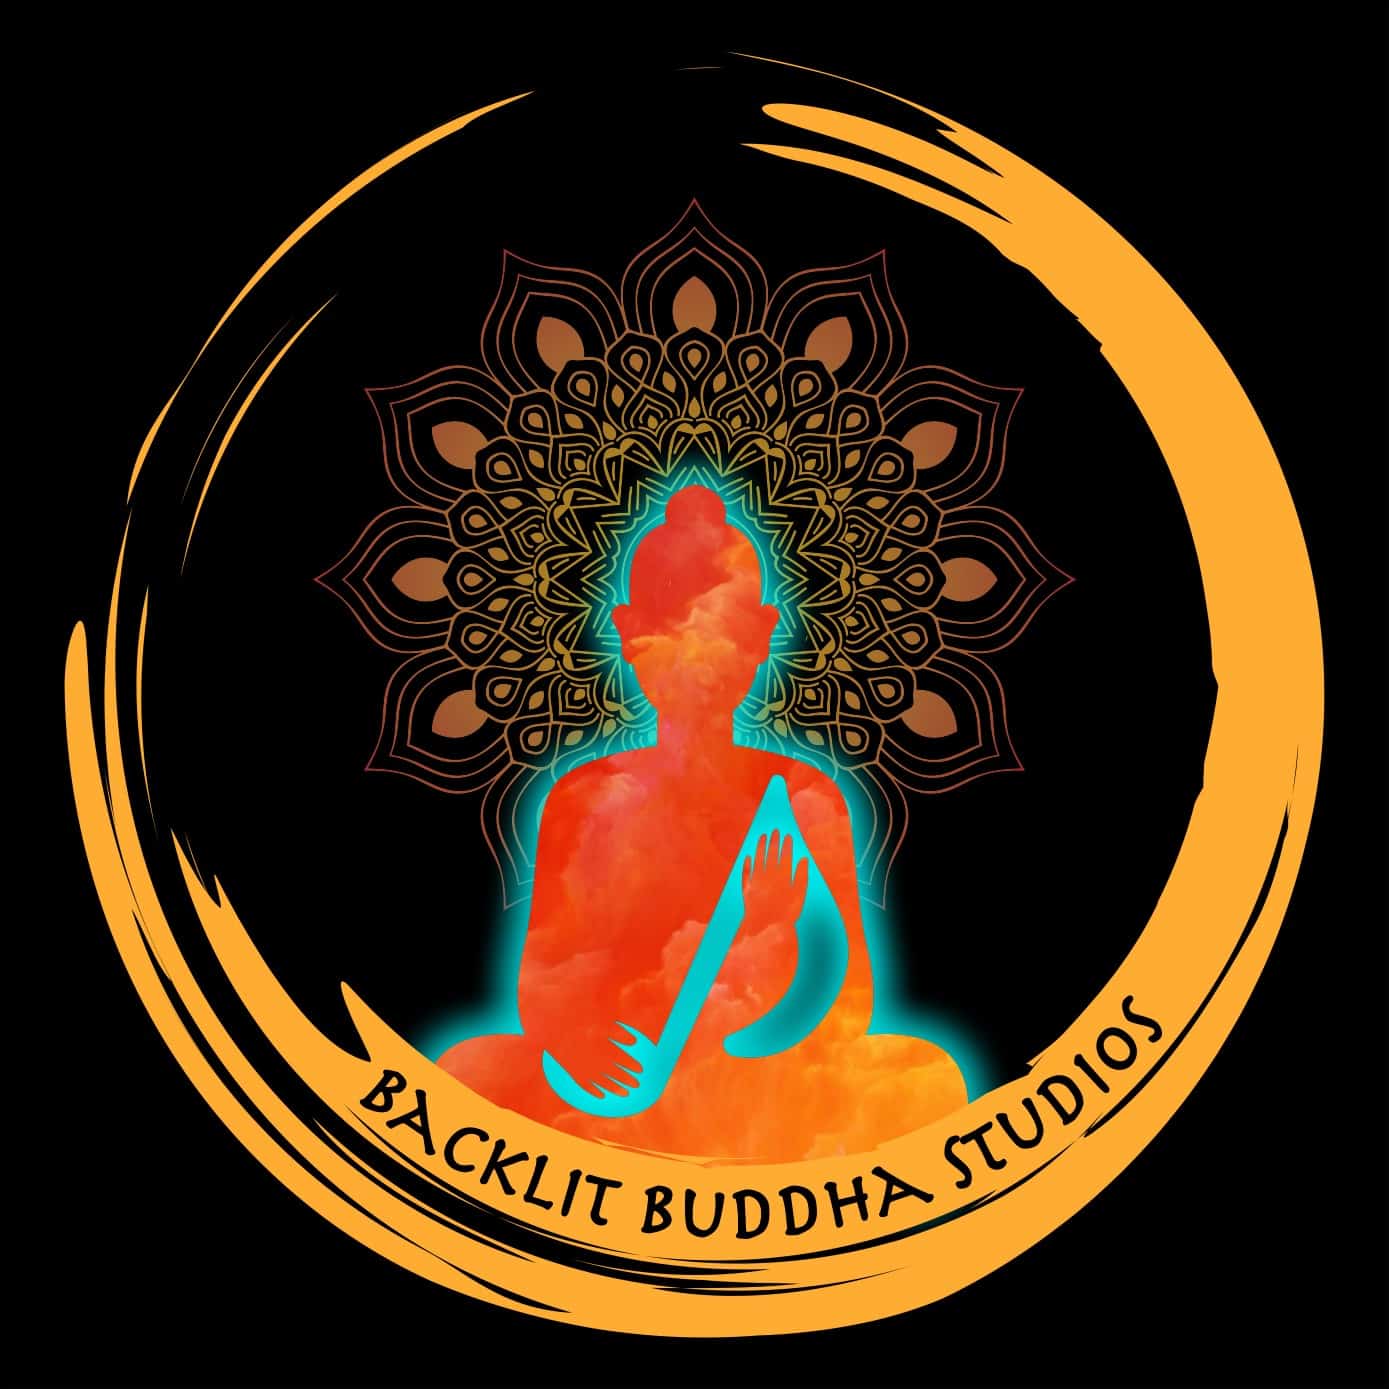 BackLit Buddha Studios logo